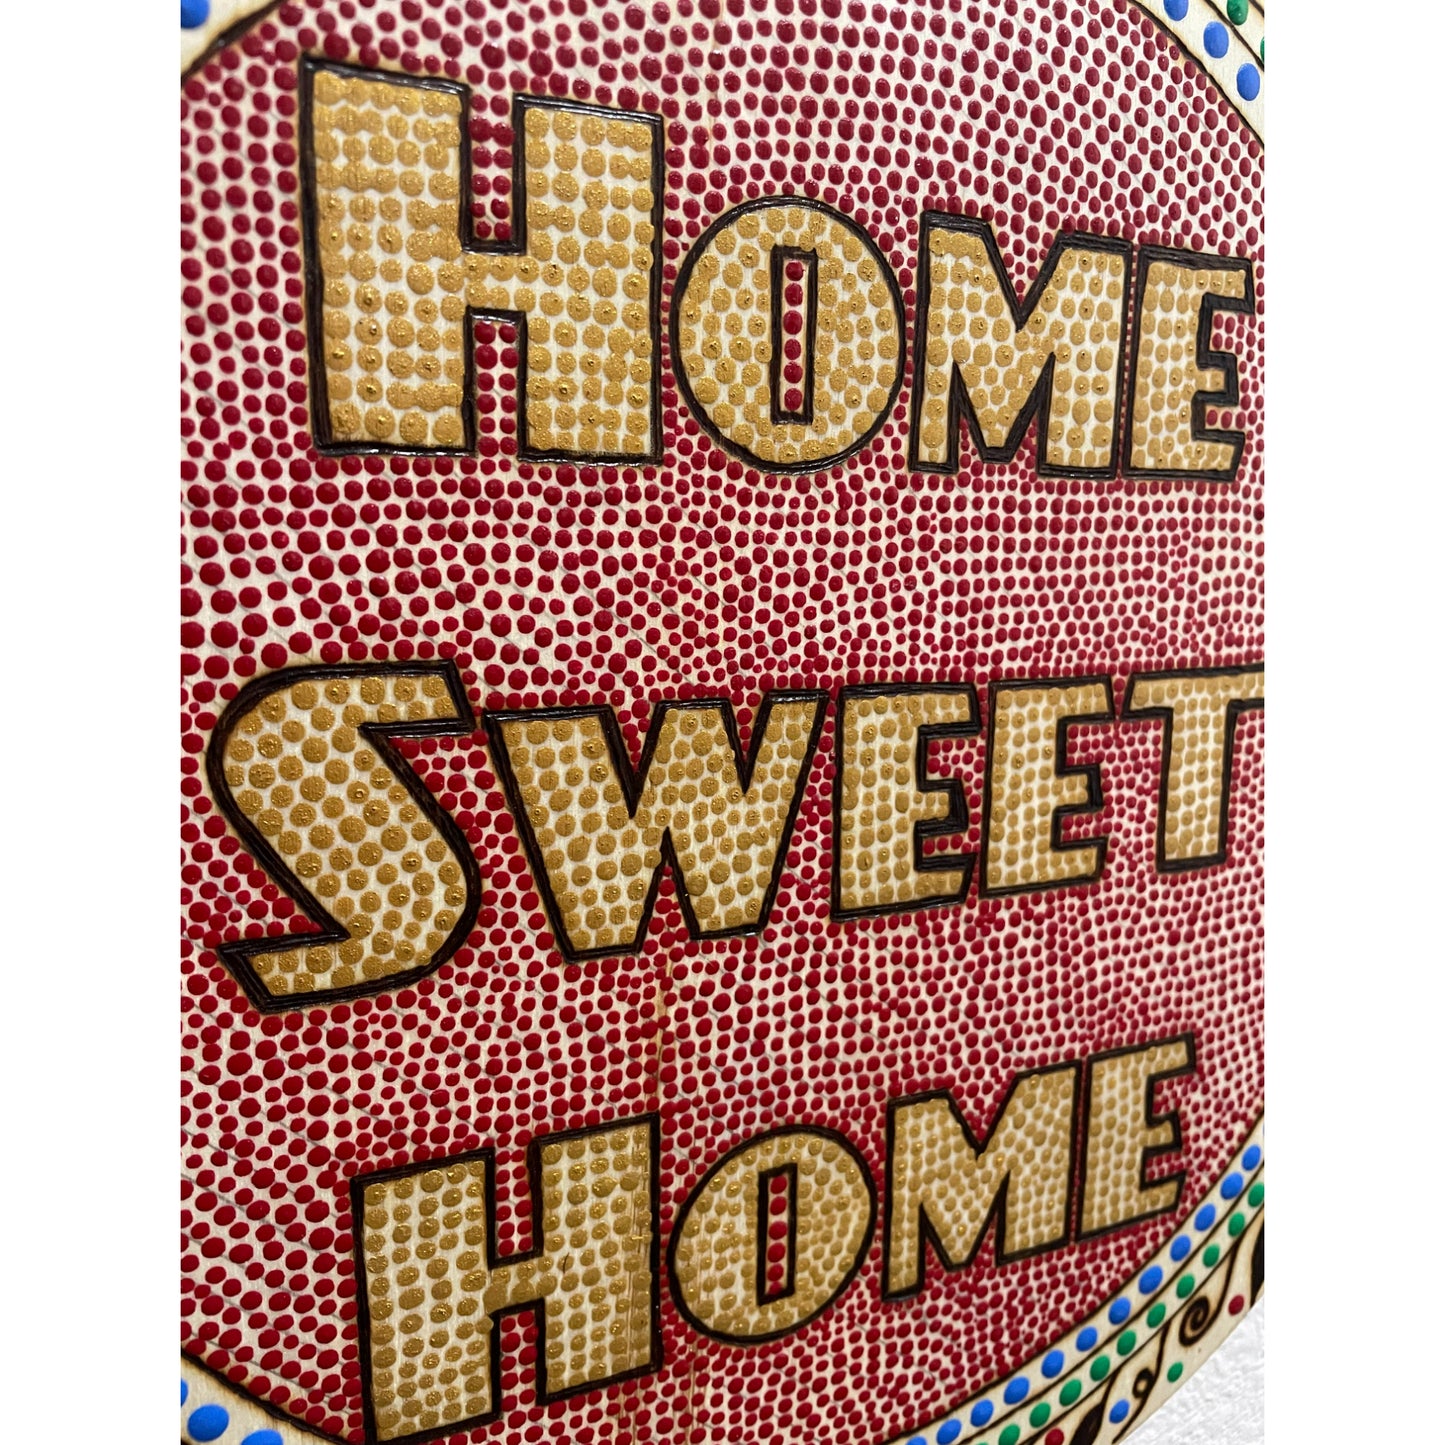 Home Sweet Home Dot Art - East West Art Creations